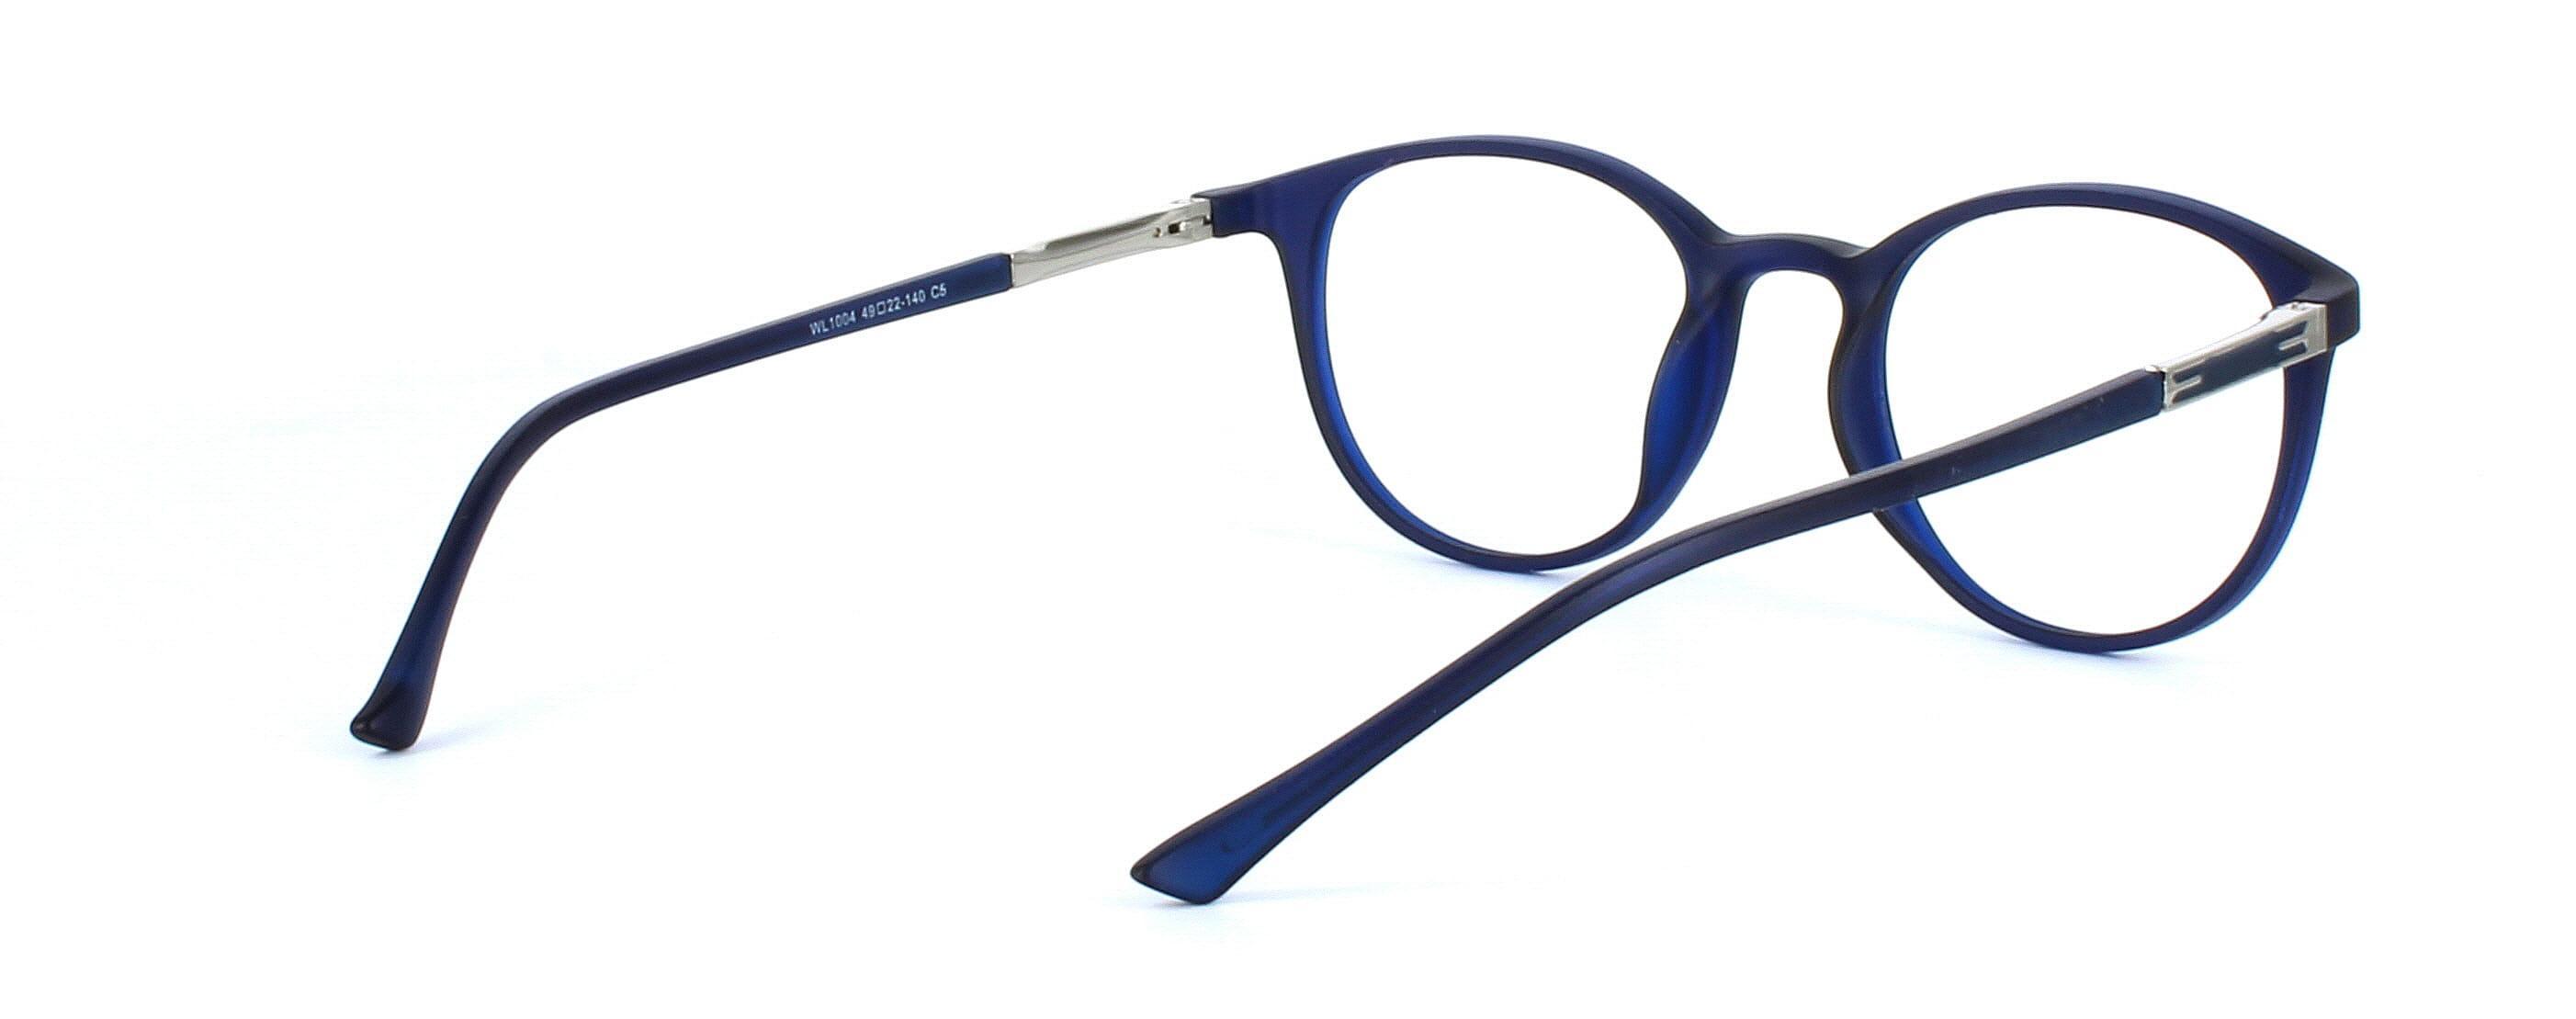 Mensa - Blue - Ladies round shaped plastic glasses - image view 4